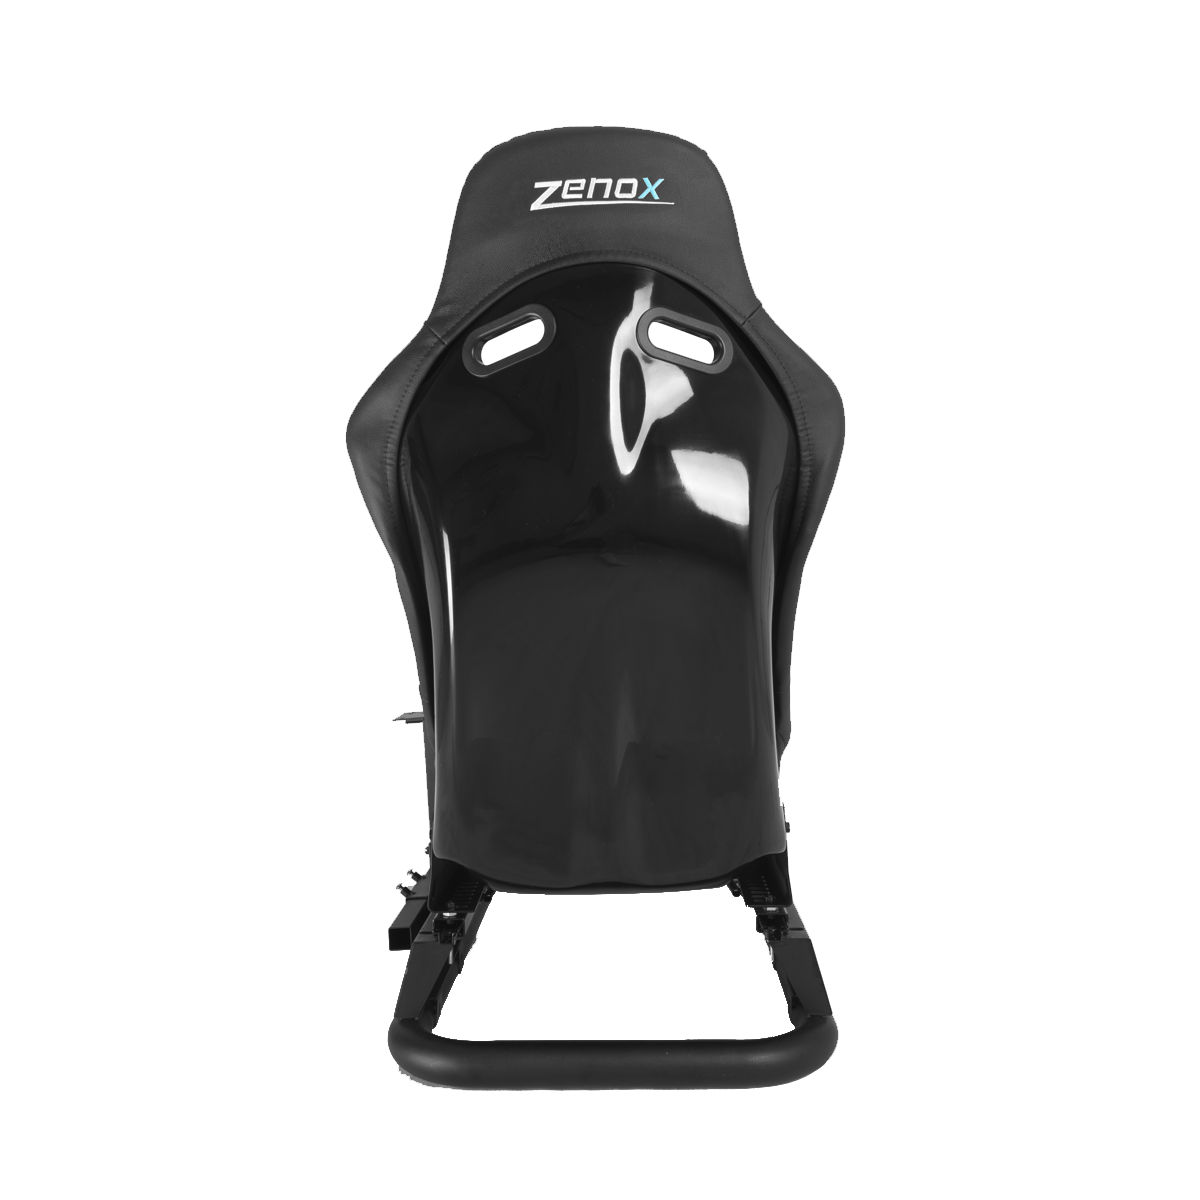 Zenox GT3 Simulator Rig with Bucket Seat 賽車架